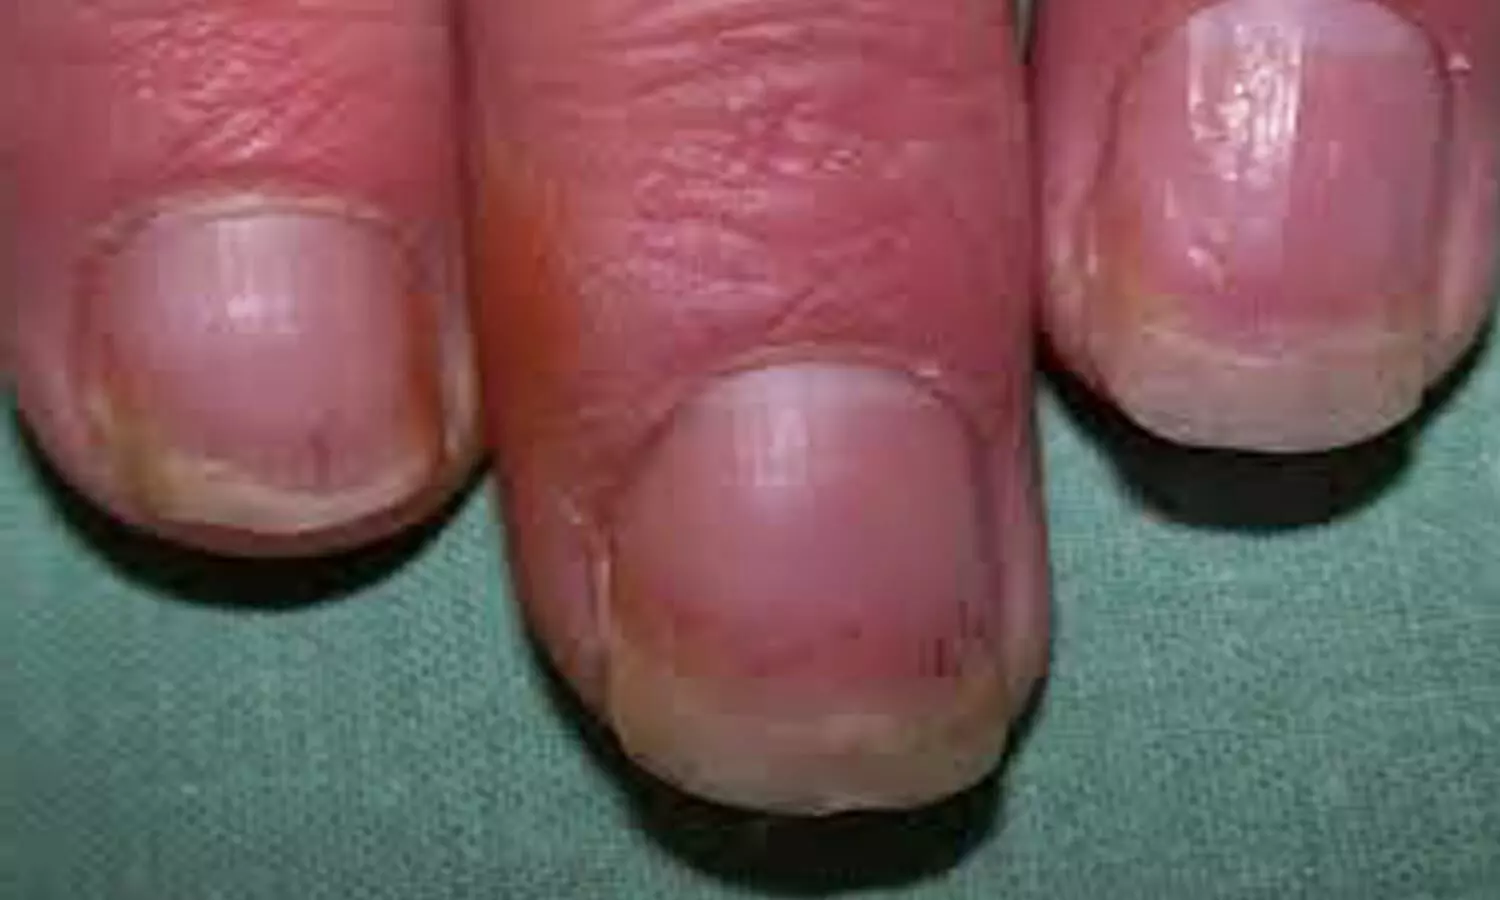 psoriasis nail changes dermnet)